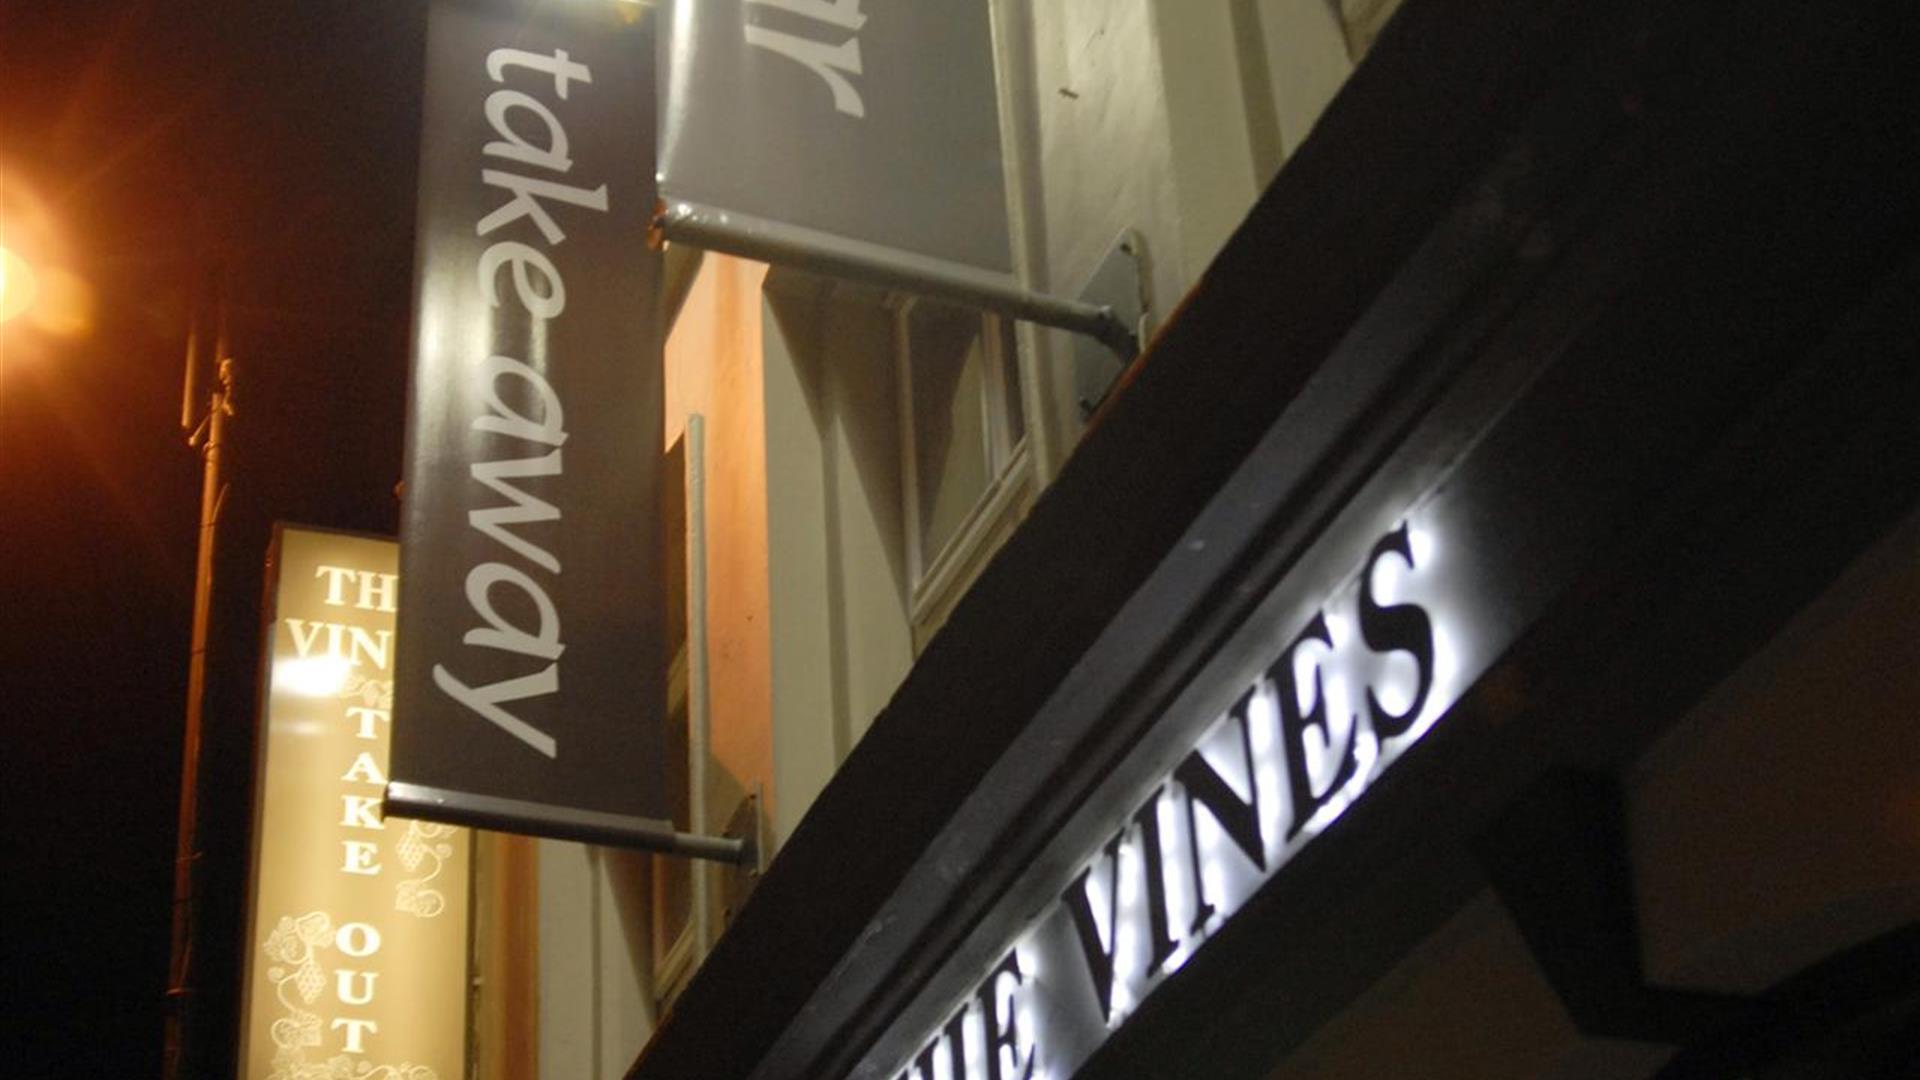 The Vines Winebar